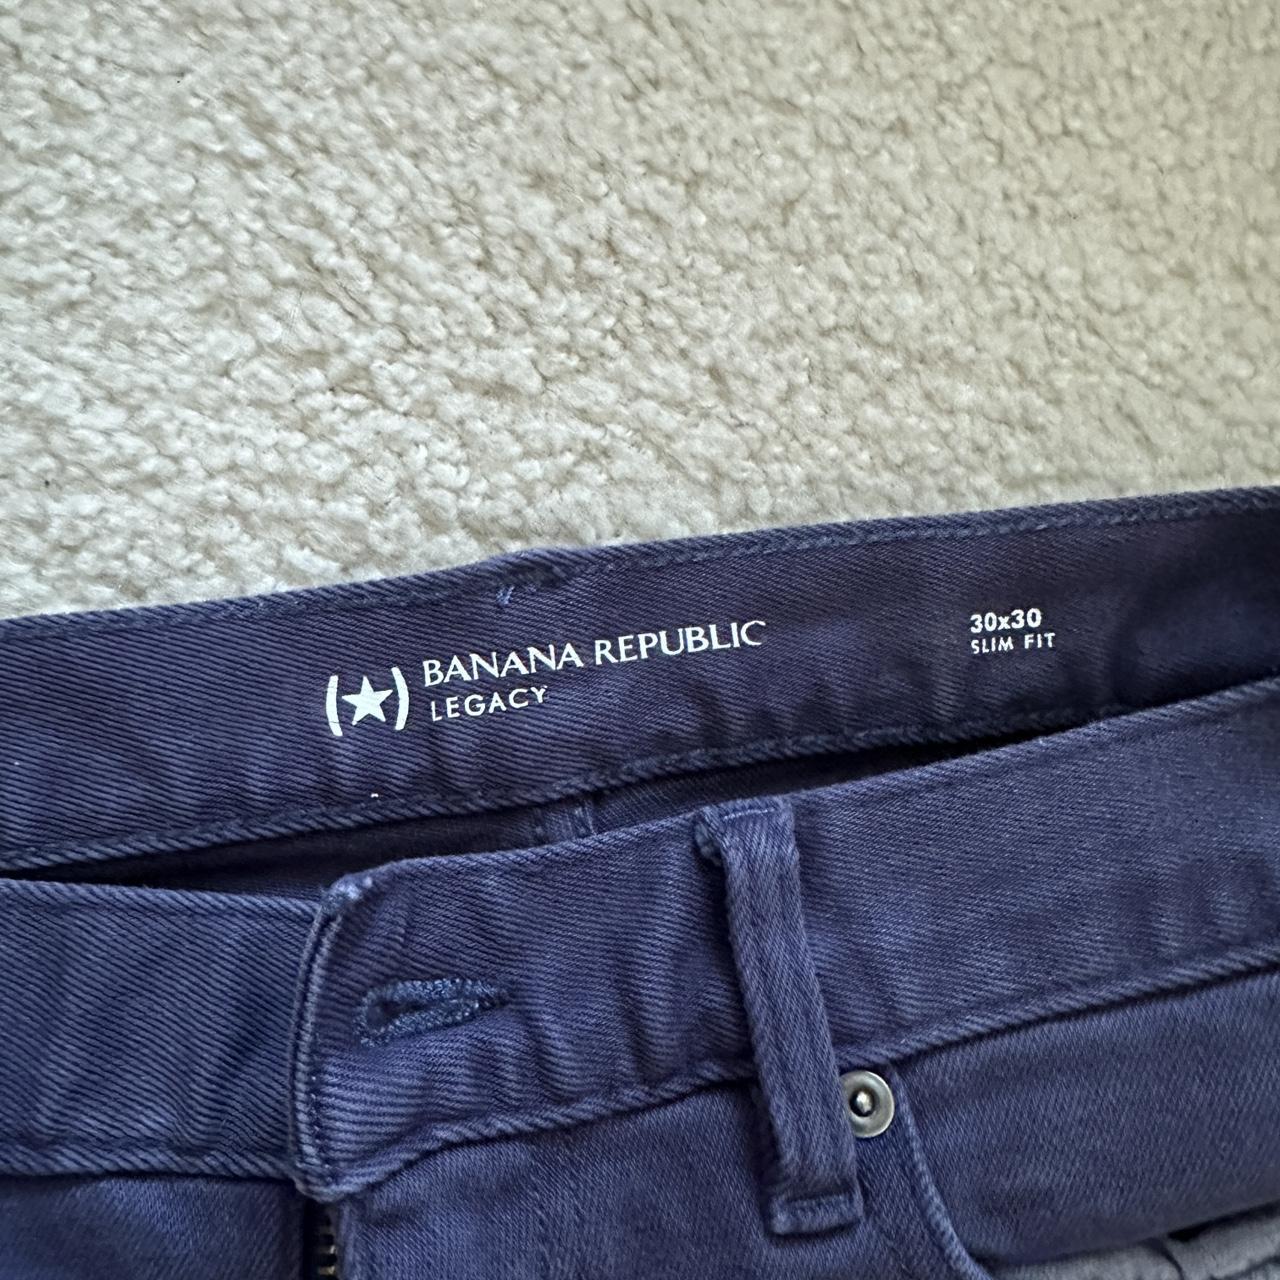 Banana Republic | Jeans | Banana Republic Slim Fit Legacy Denim Jeans Size  35x36 | Poshmark